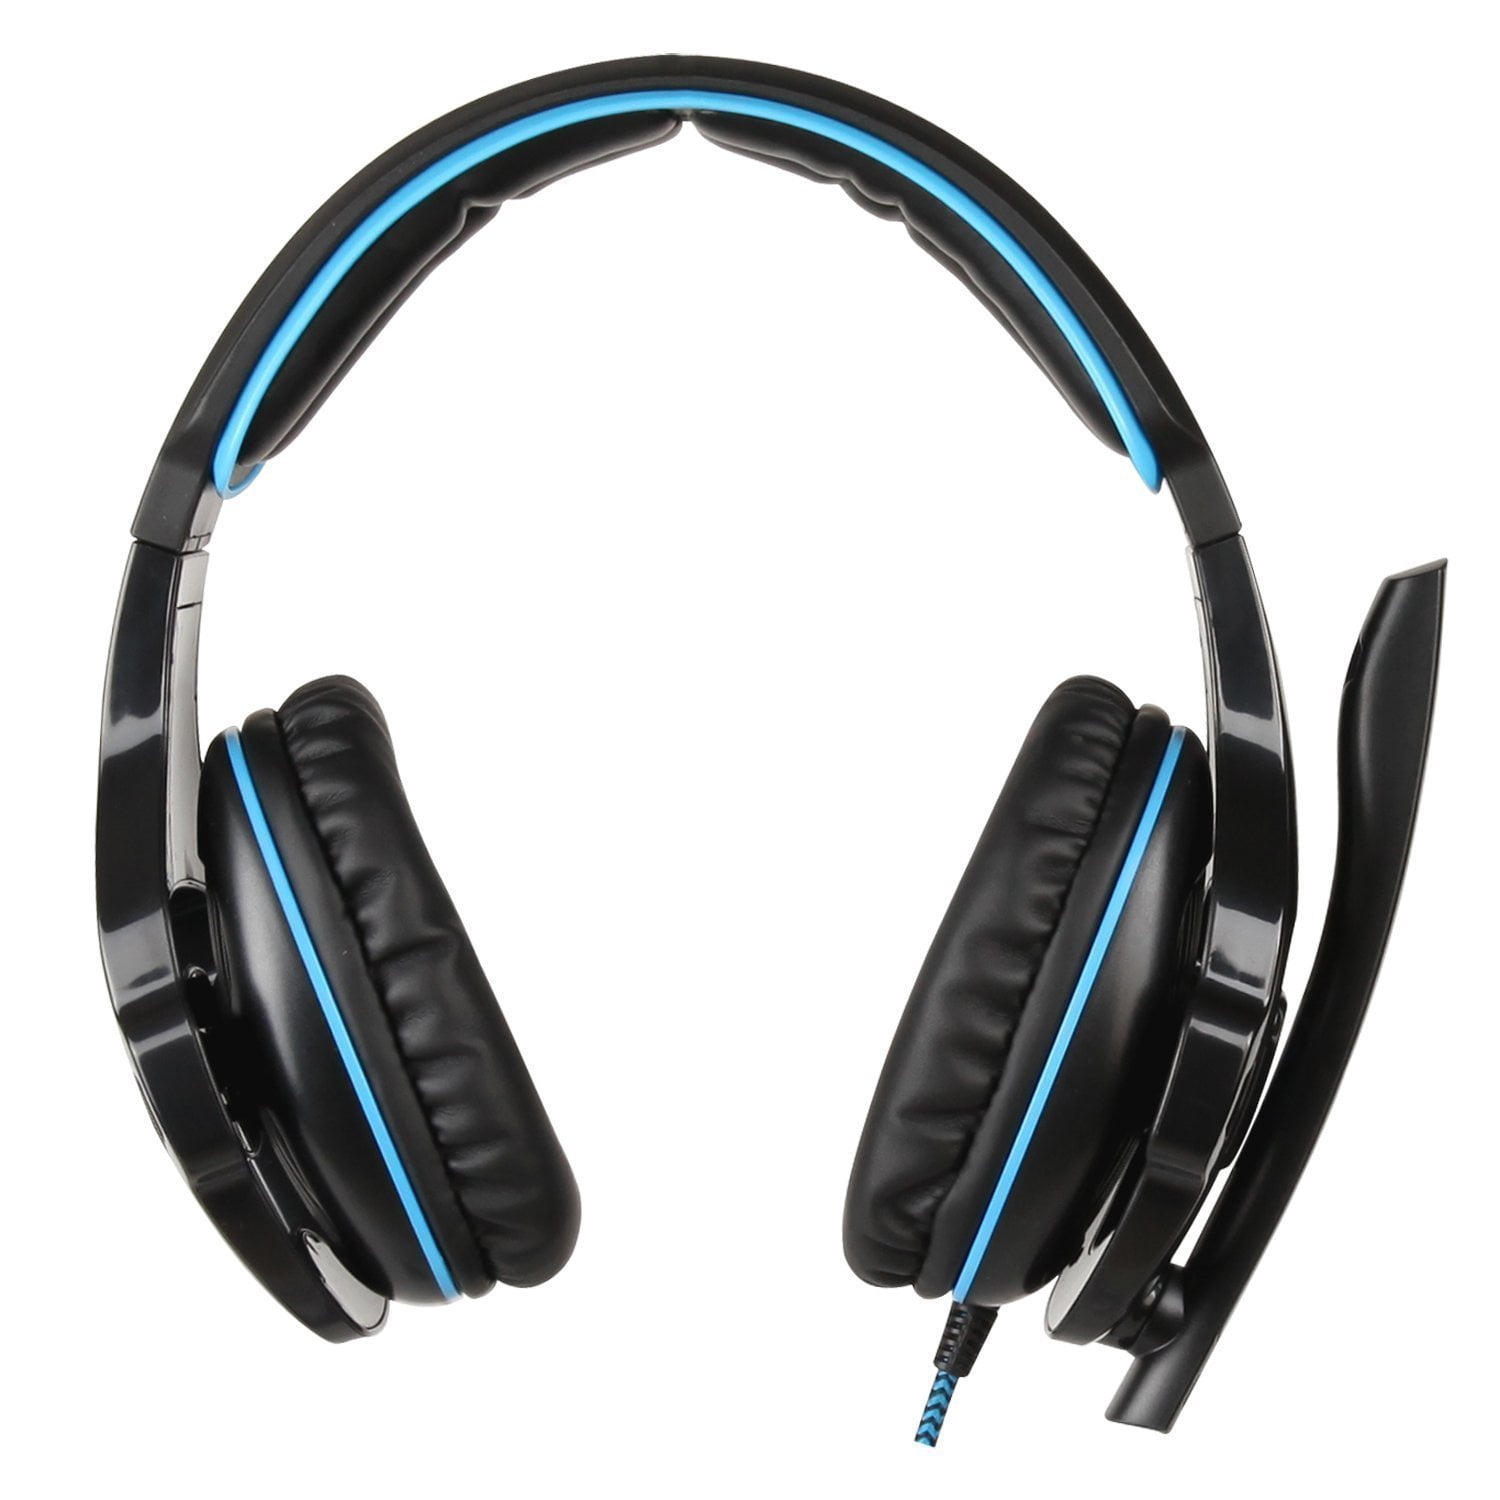 Sades Sa903 Usb 7 1 Surround Sound Stereo Gaming Headset With Mic For Pc Laptop Walmart Com Walmart Com